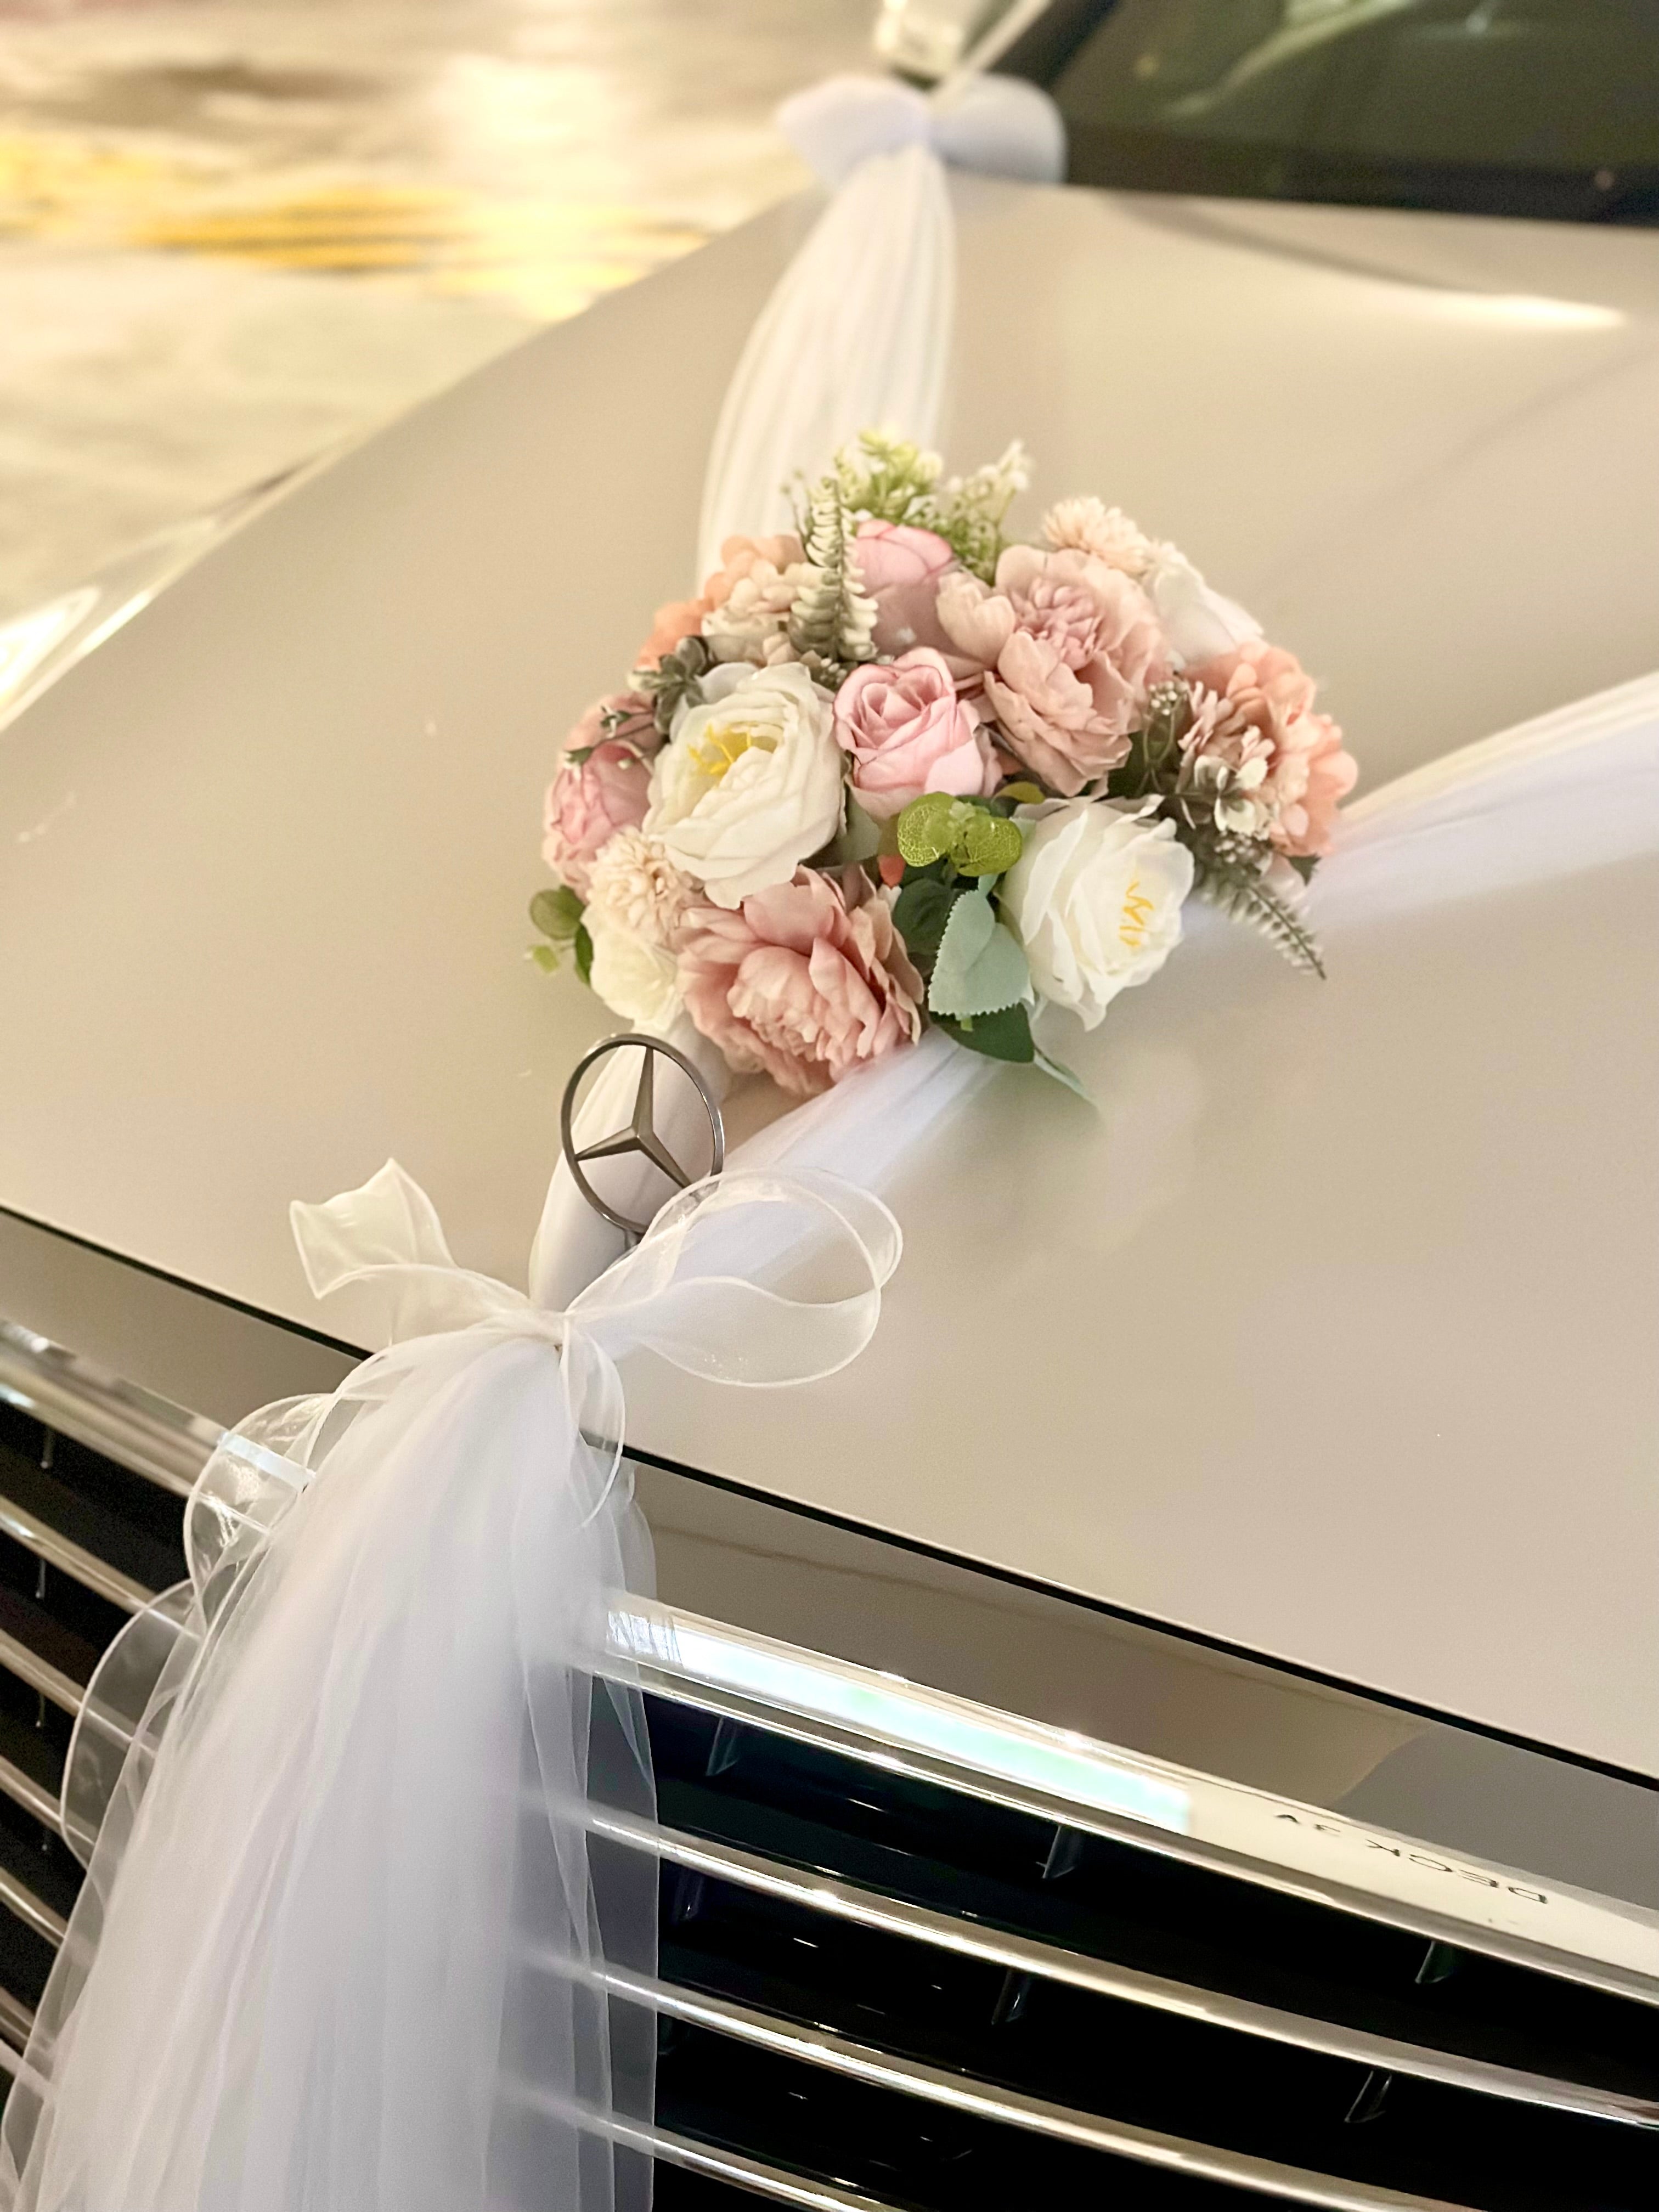 Bridal car deco – Kesed creates